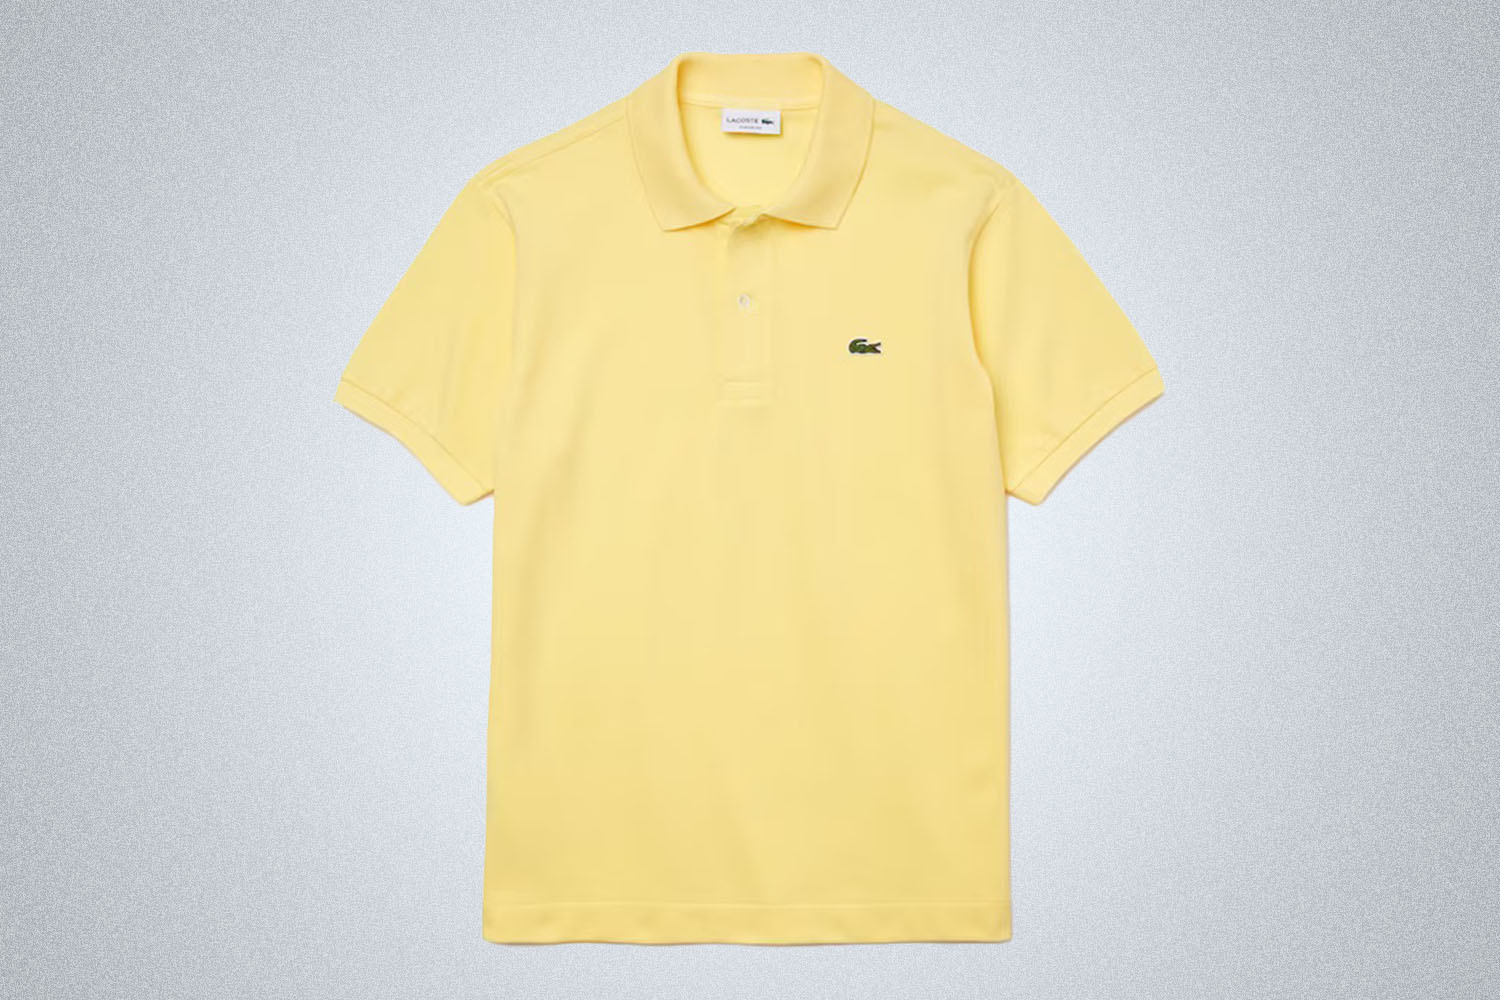 Lacoste vs. Ralph Lauren: Polo Shirt is Better? - InsideHook